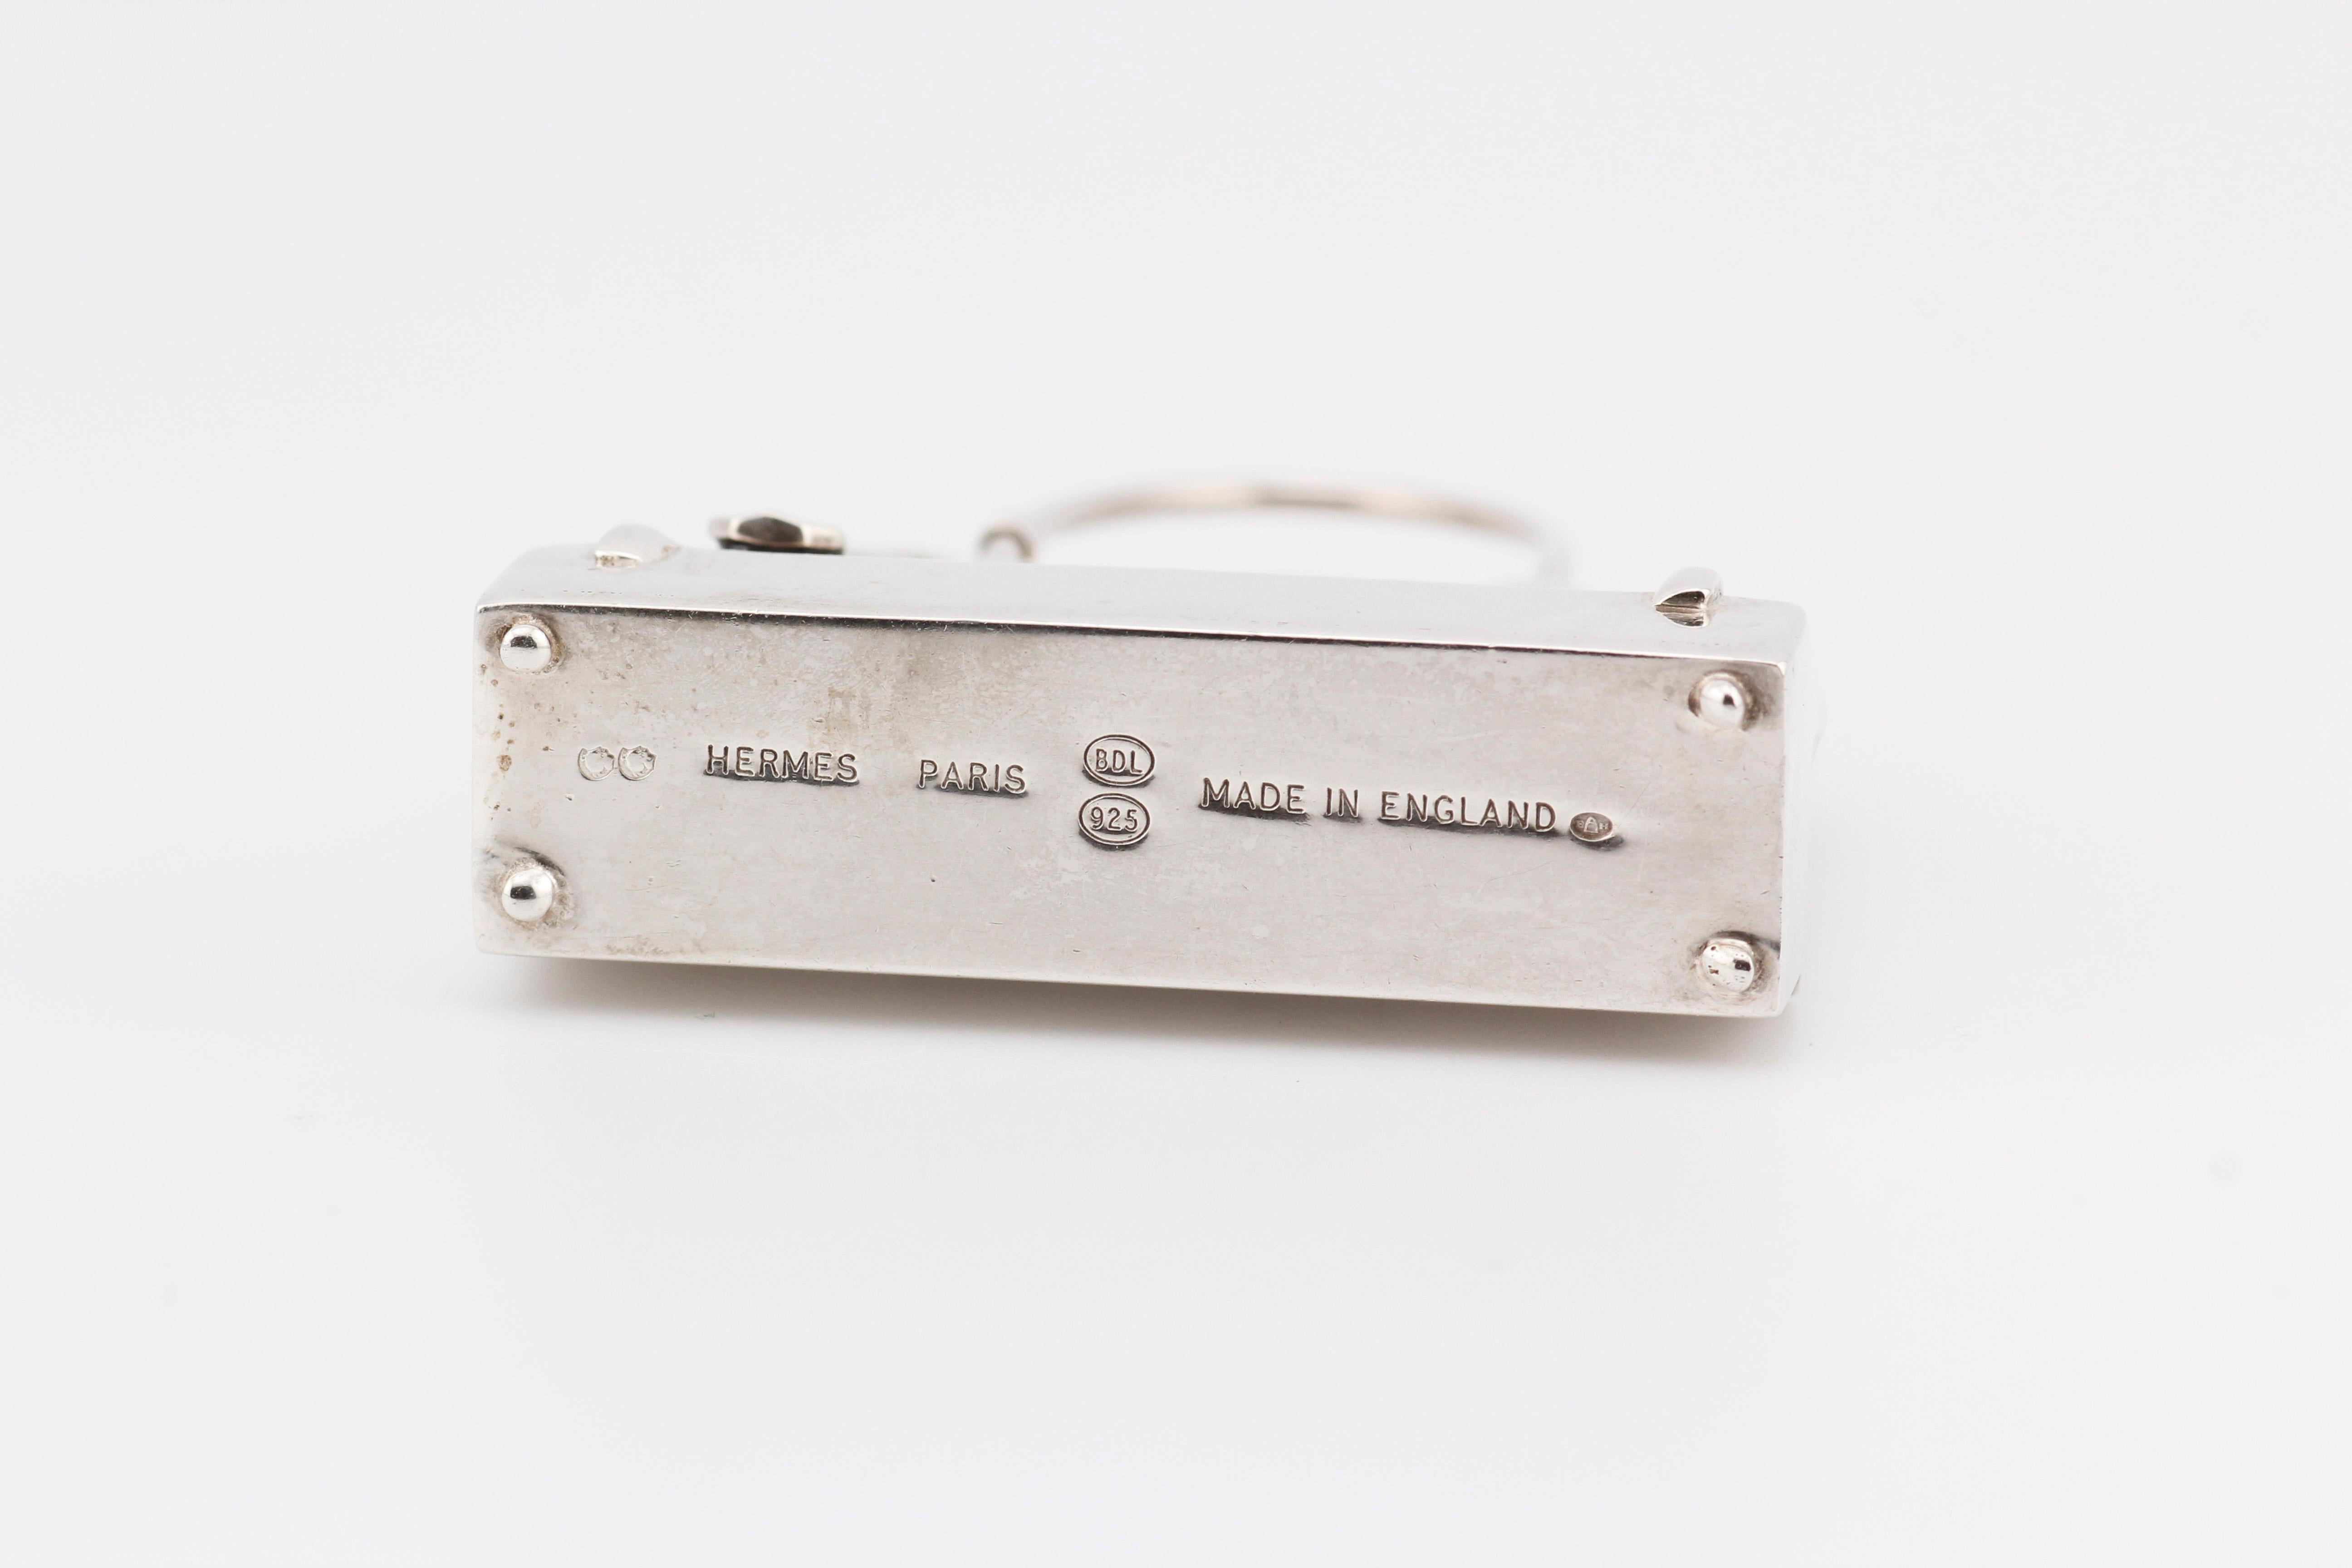 Hermes Paris Große Sterling Silber Bolide Tasche Pill Box Charm Anhänger 3